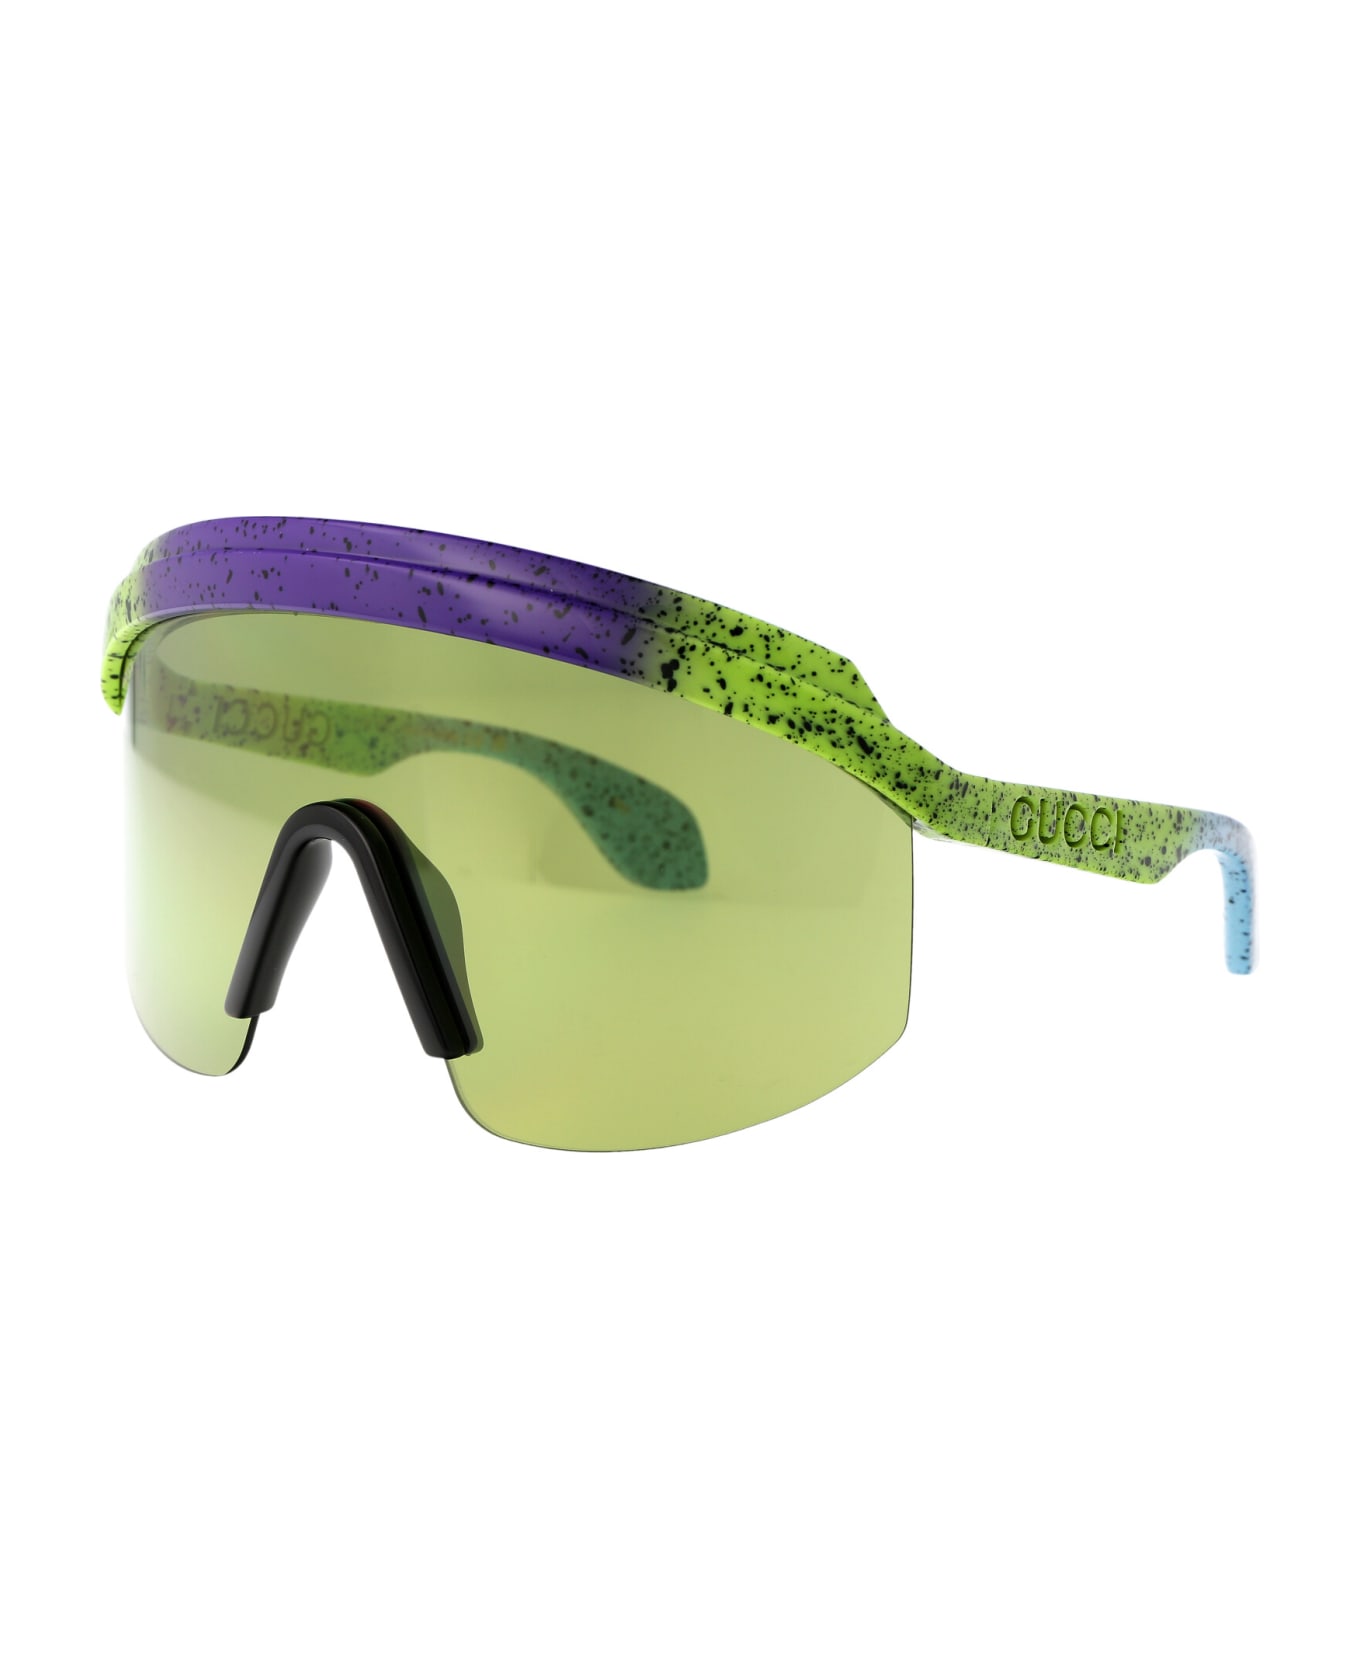 Gucci Eyewear Gg1477s Sunglasses - 001 GREEN GREEN GREEN